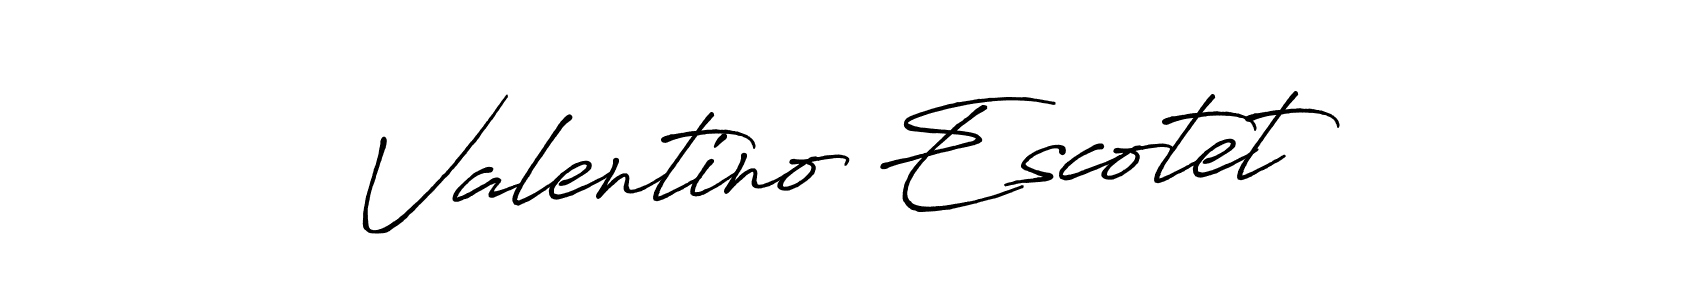 How to Draw Valentino Escotet signature style? Antro_Vectra_Bolder is a latest design signature styles for name Valentino Escotet. Valentino Escotet signature style 7 images and pictures png